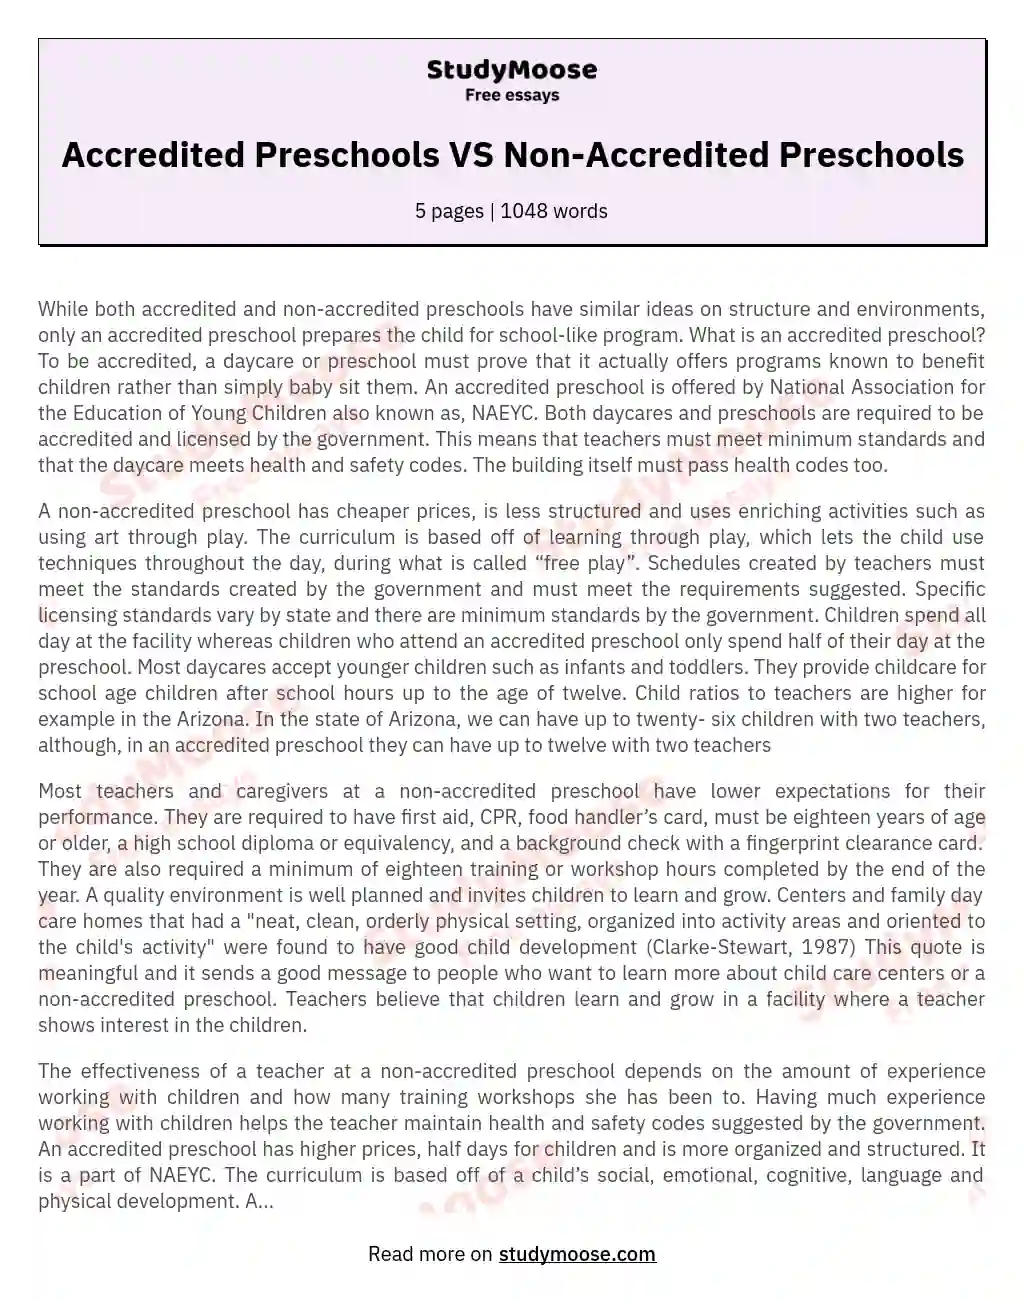 Accredited Preschools VS Non-Accredited Preschools essay